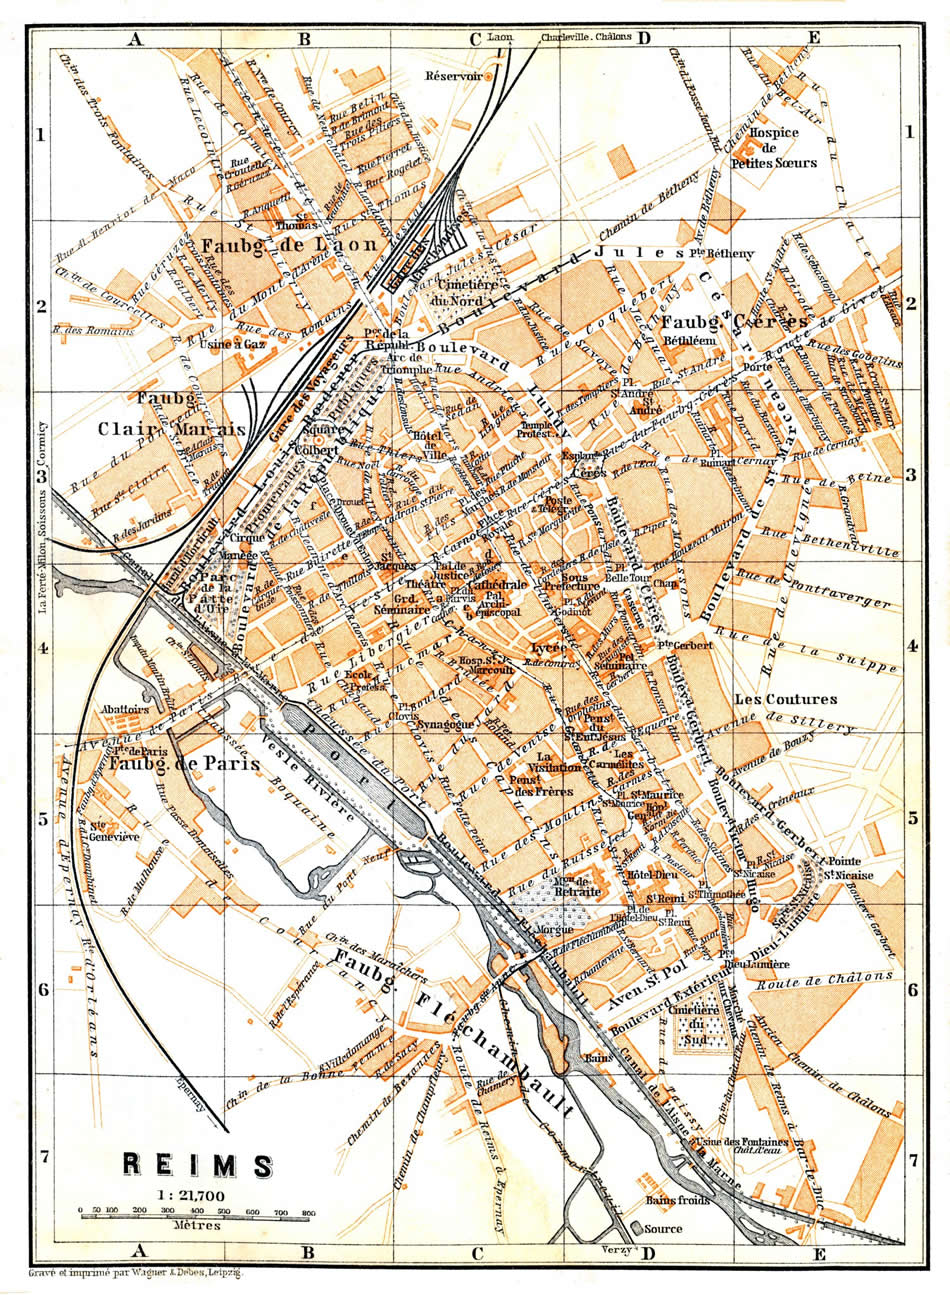 Reims map 1899